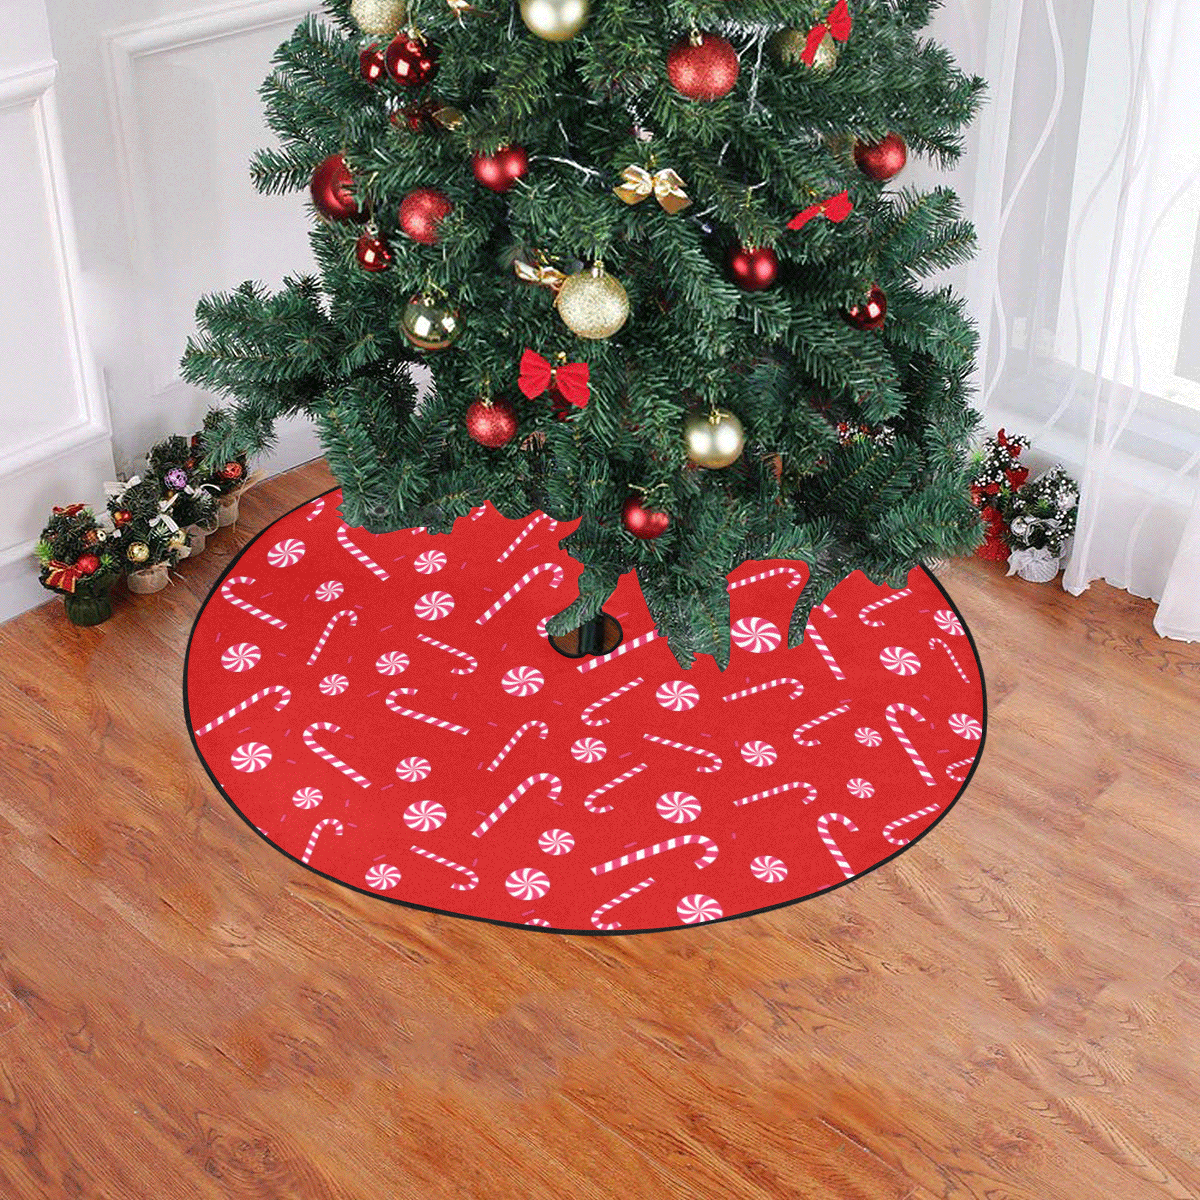 Candy CANE Christmas Tree Skirt 47" x 47"